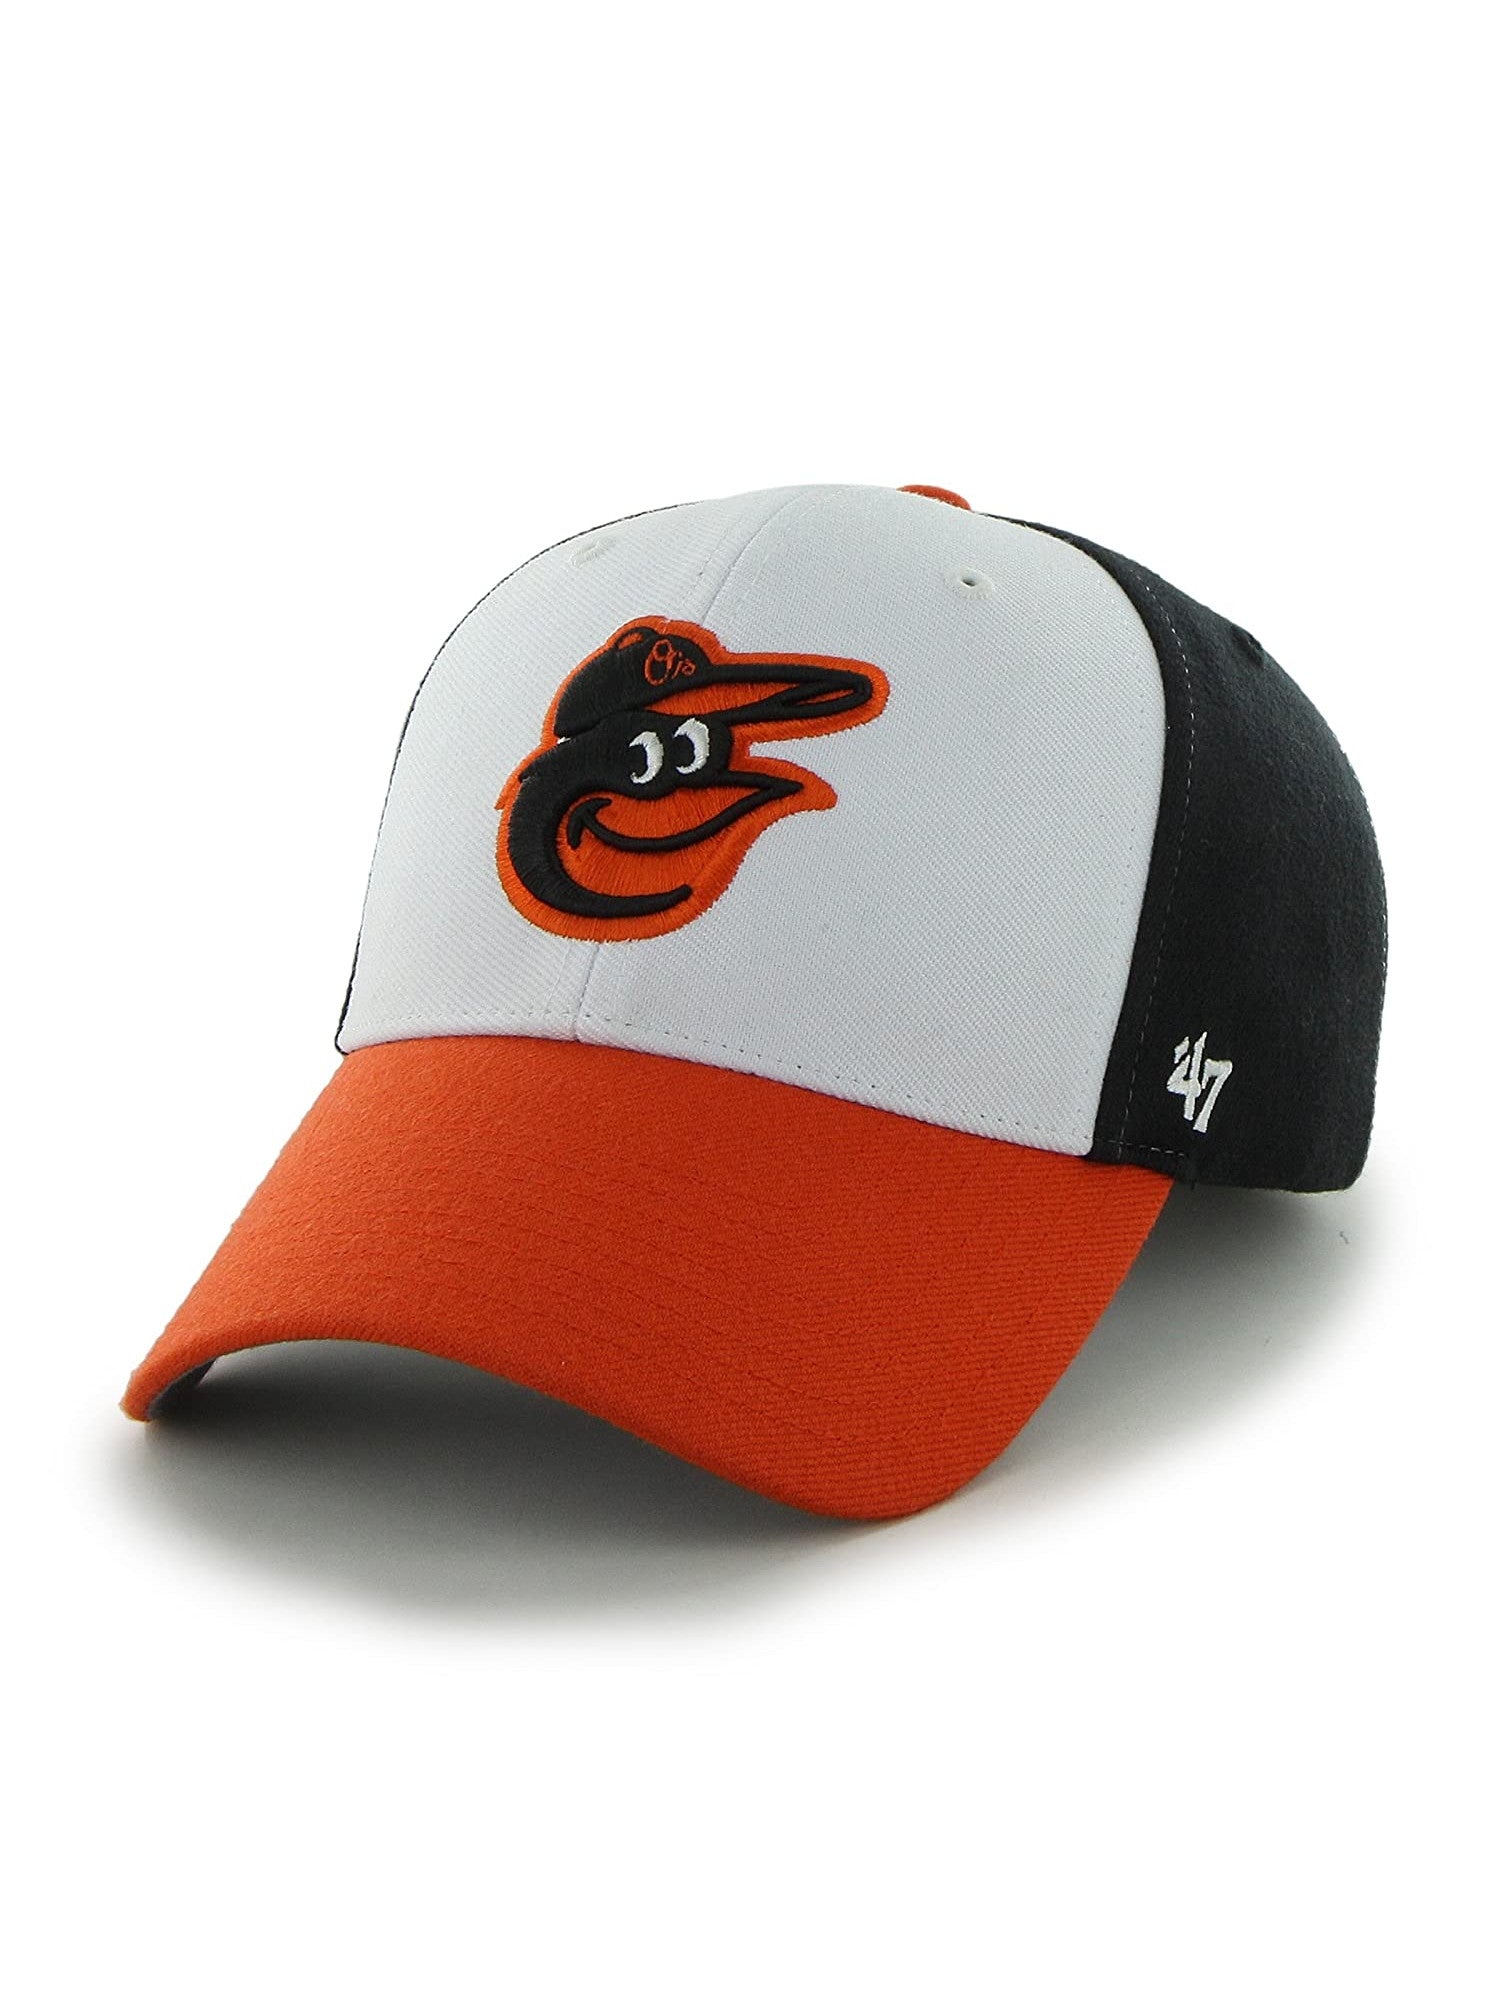 Official Baltimore Orioles Hats, Orioles Cap, Orioles Hats, Beanies